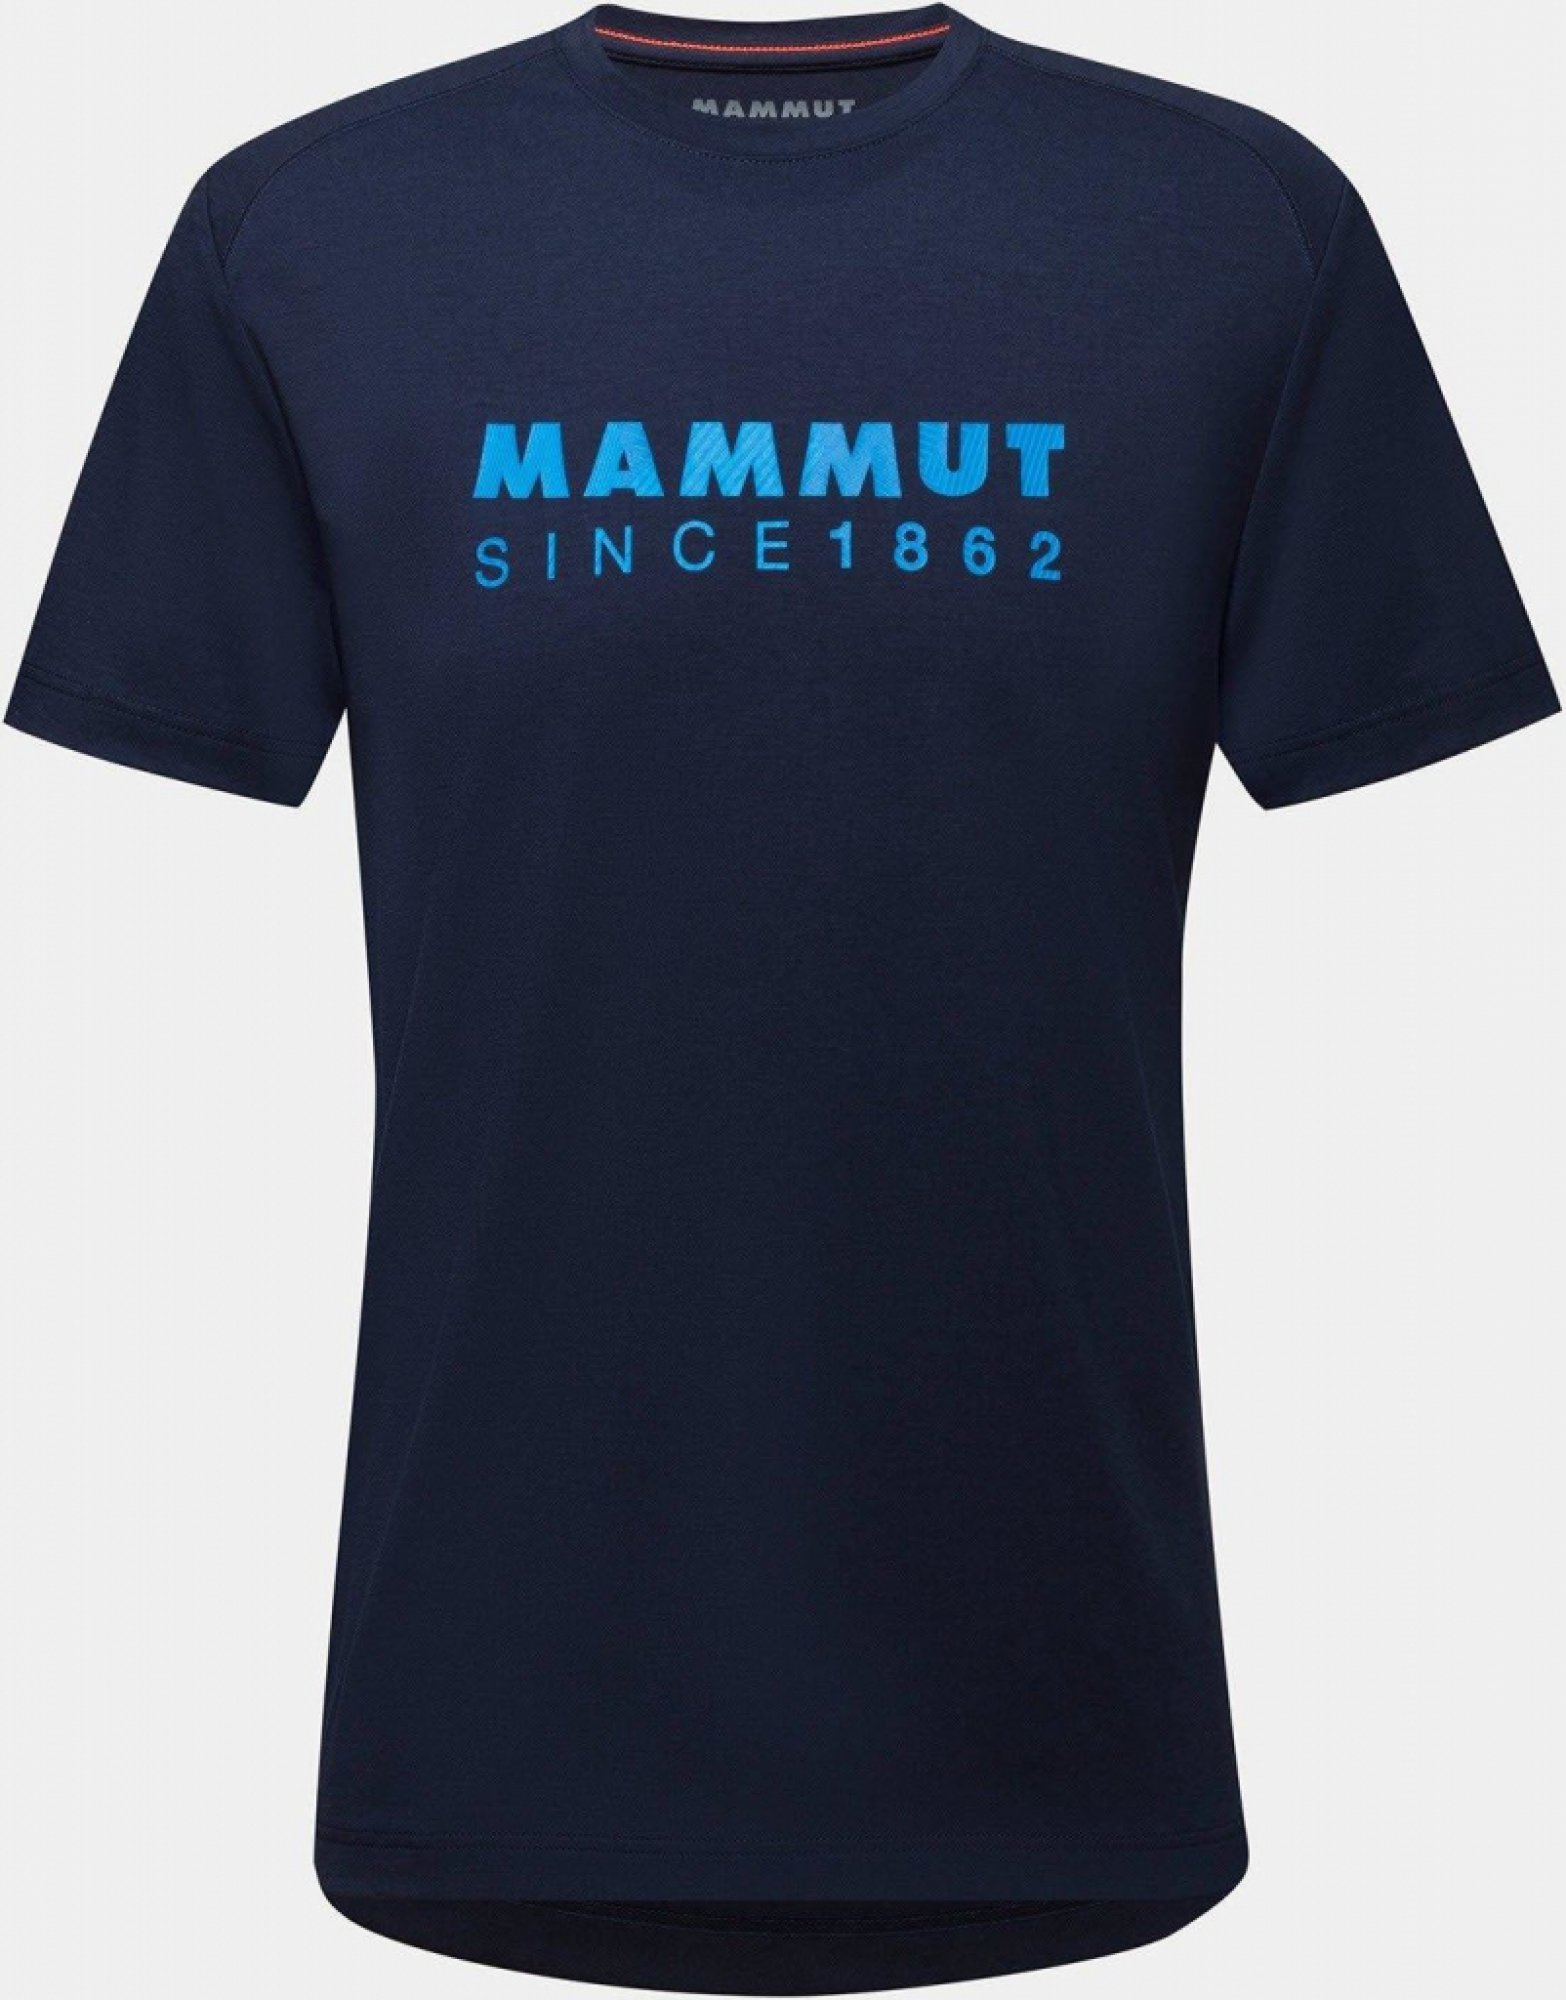 MAMMUT Trovat T-Shirt Men, marine-ice